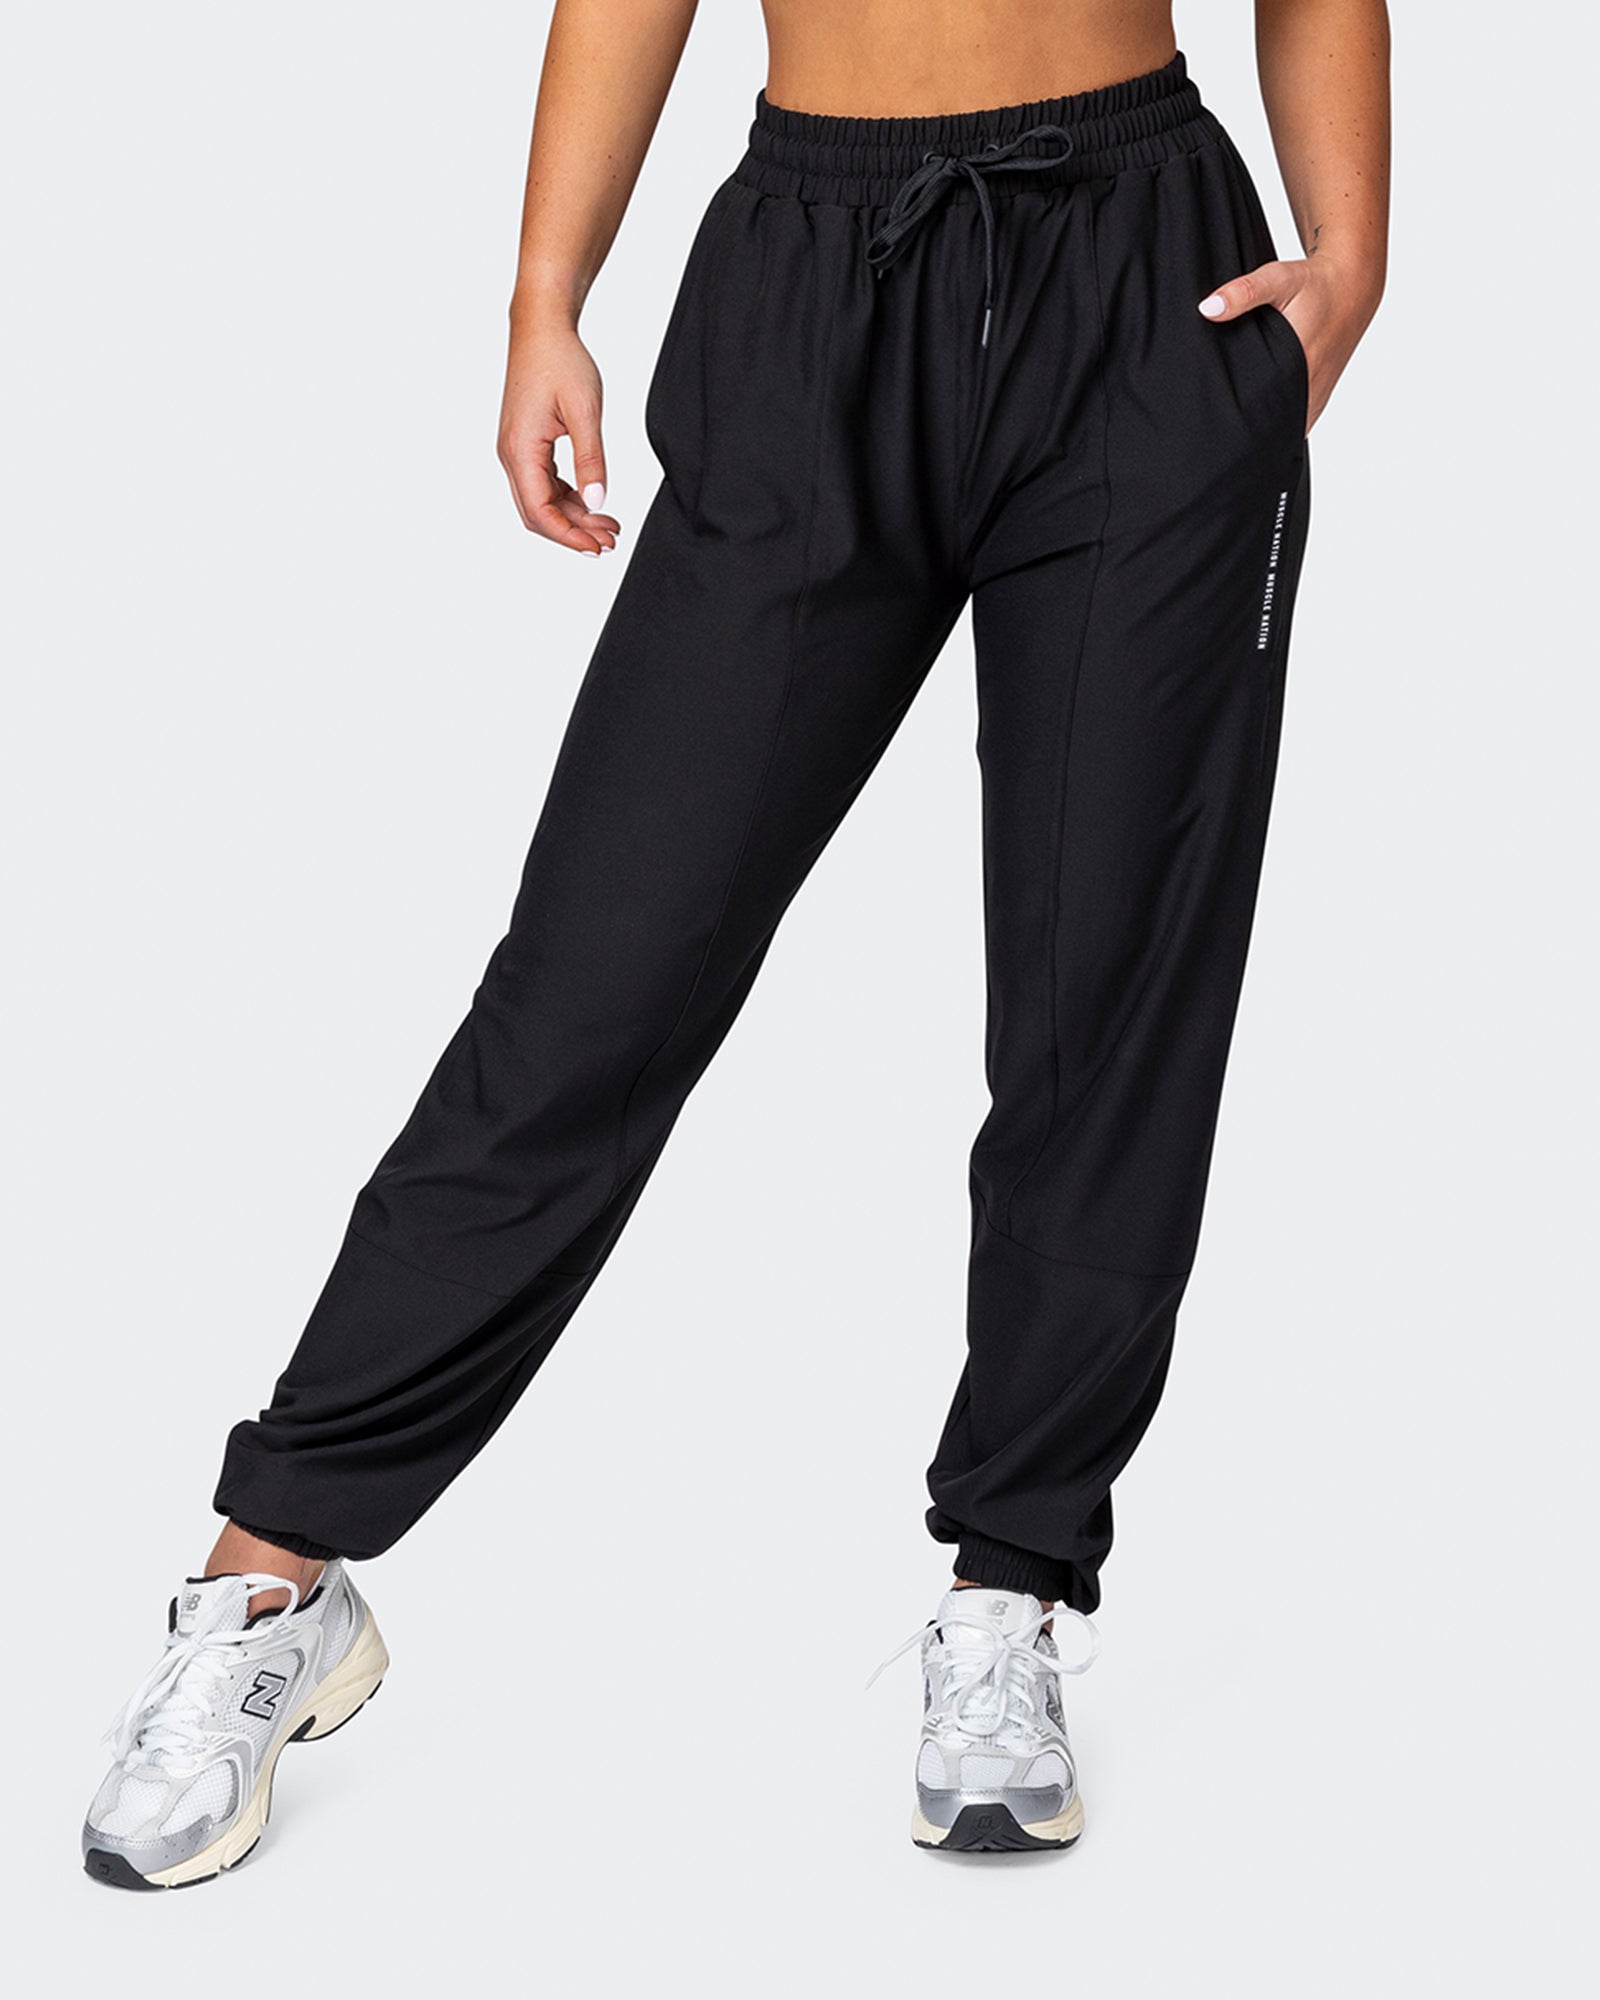 Mens Track Pants Striped Joggers Sweatpants Slim Fit Zipper TWO TONE  Drawstring | eBay